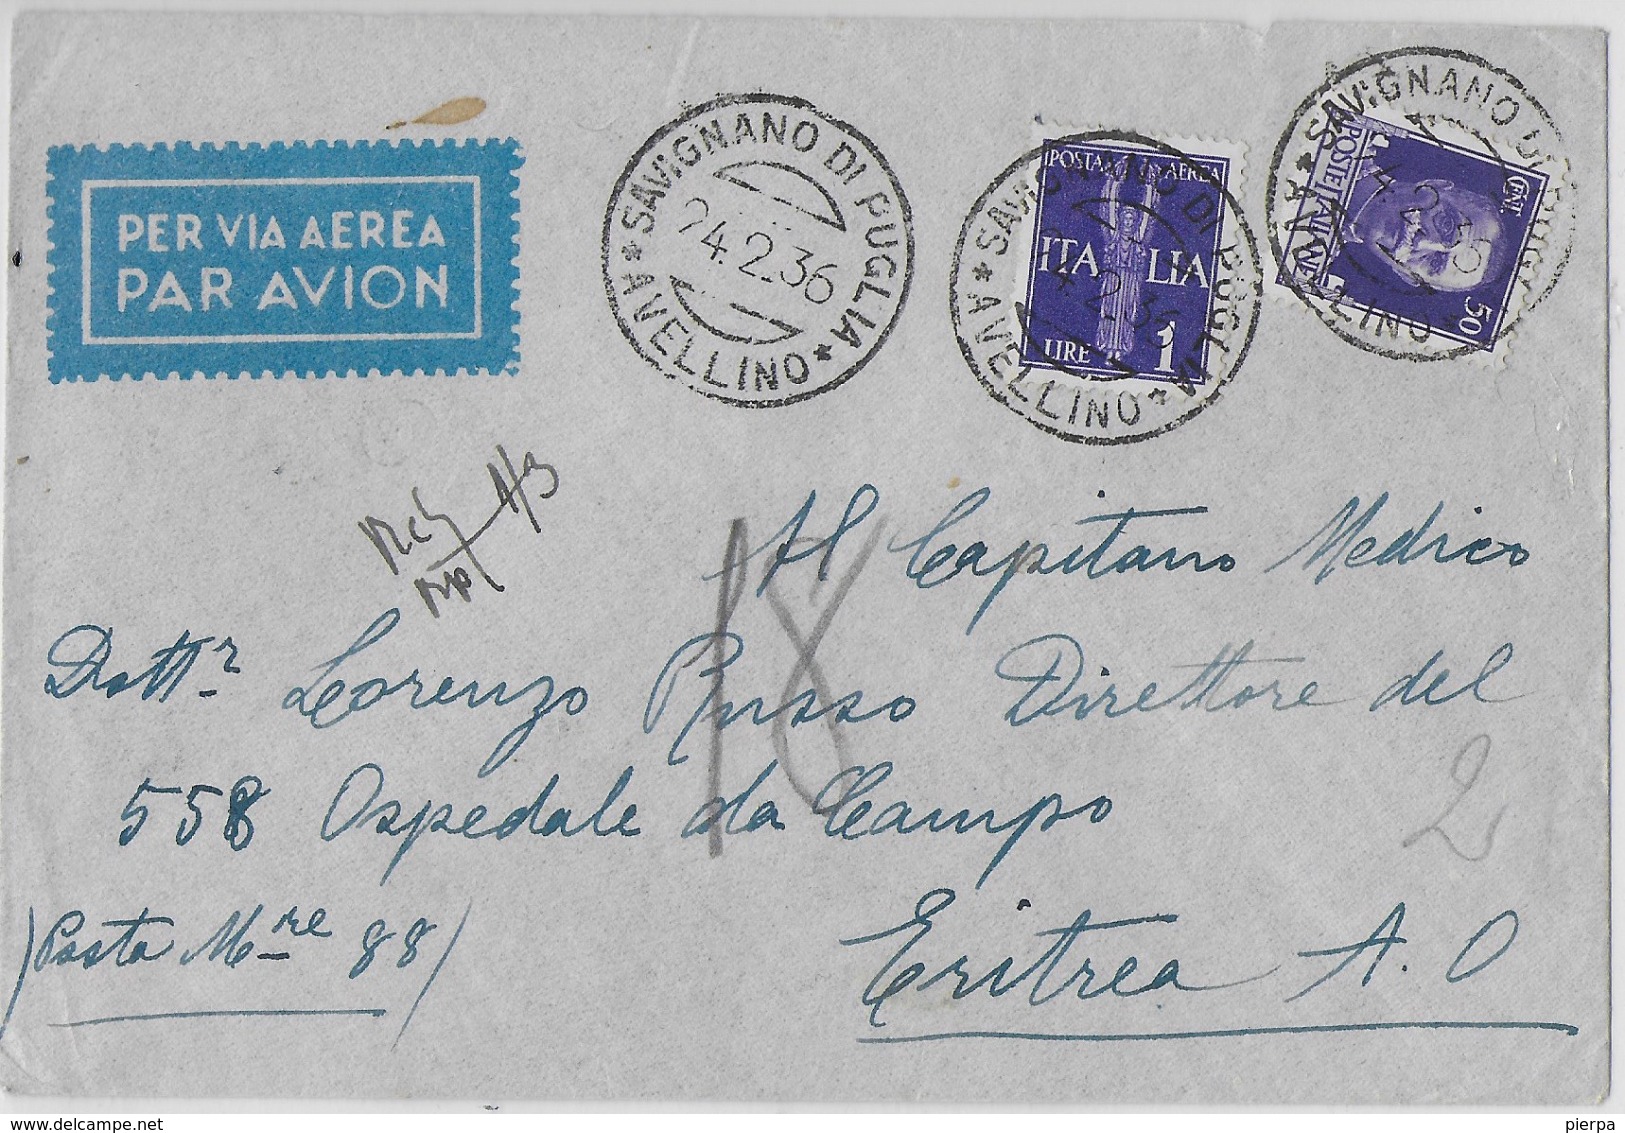 STORIA POSTALE REGNO - BUSTA DIRETTA A MILITARE IN ERITREA 1936 PER VIA AEREA - Marcophilie (Avions)